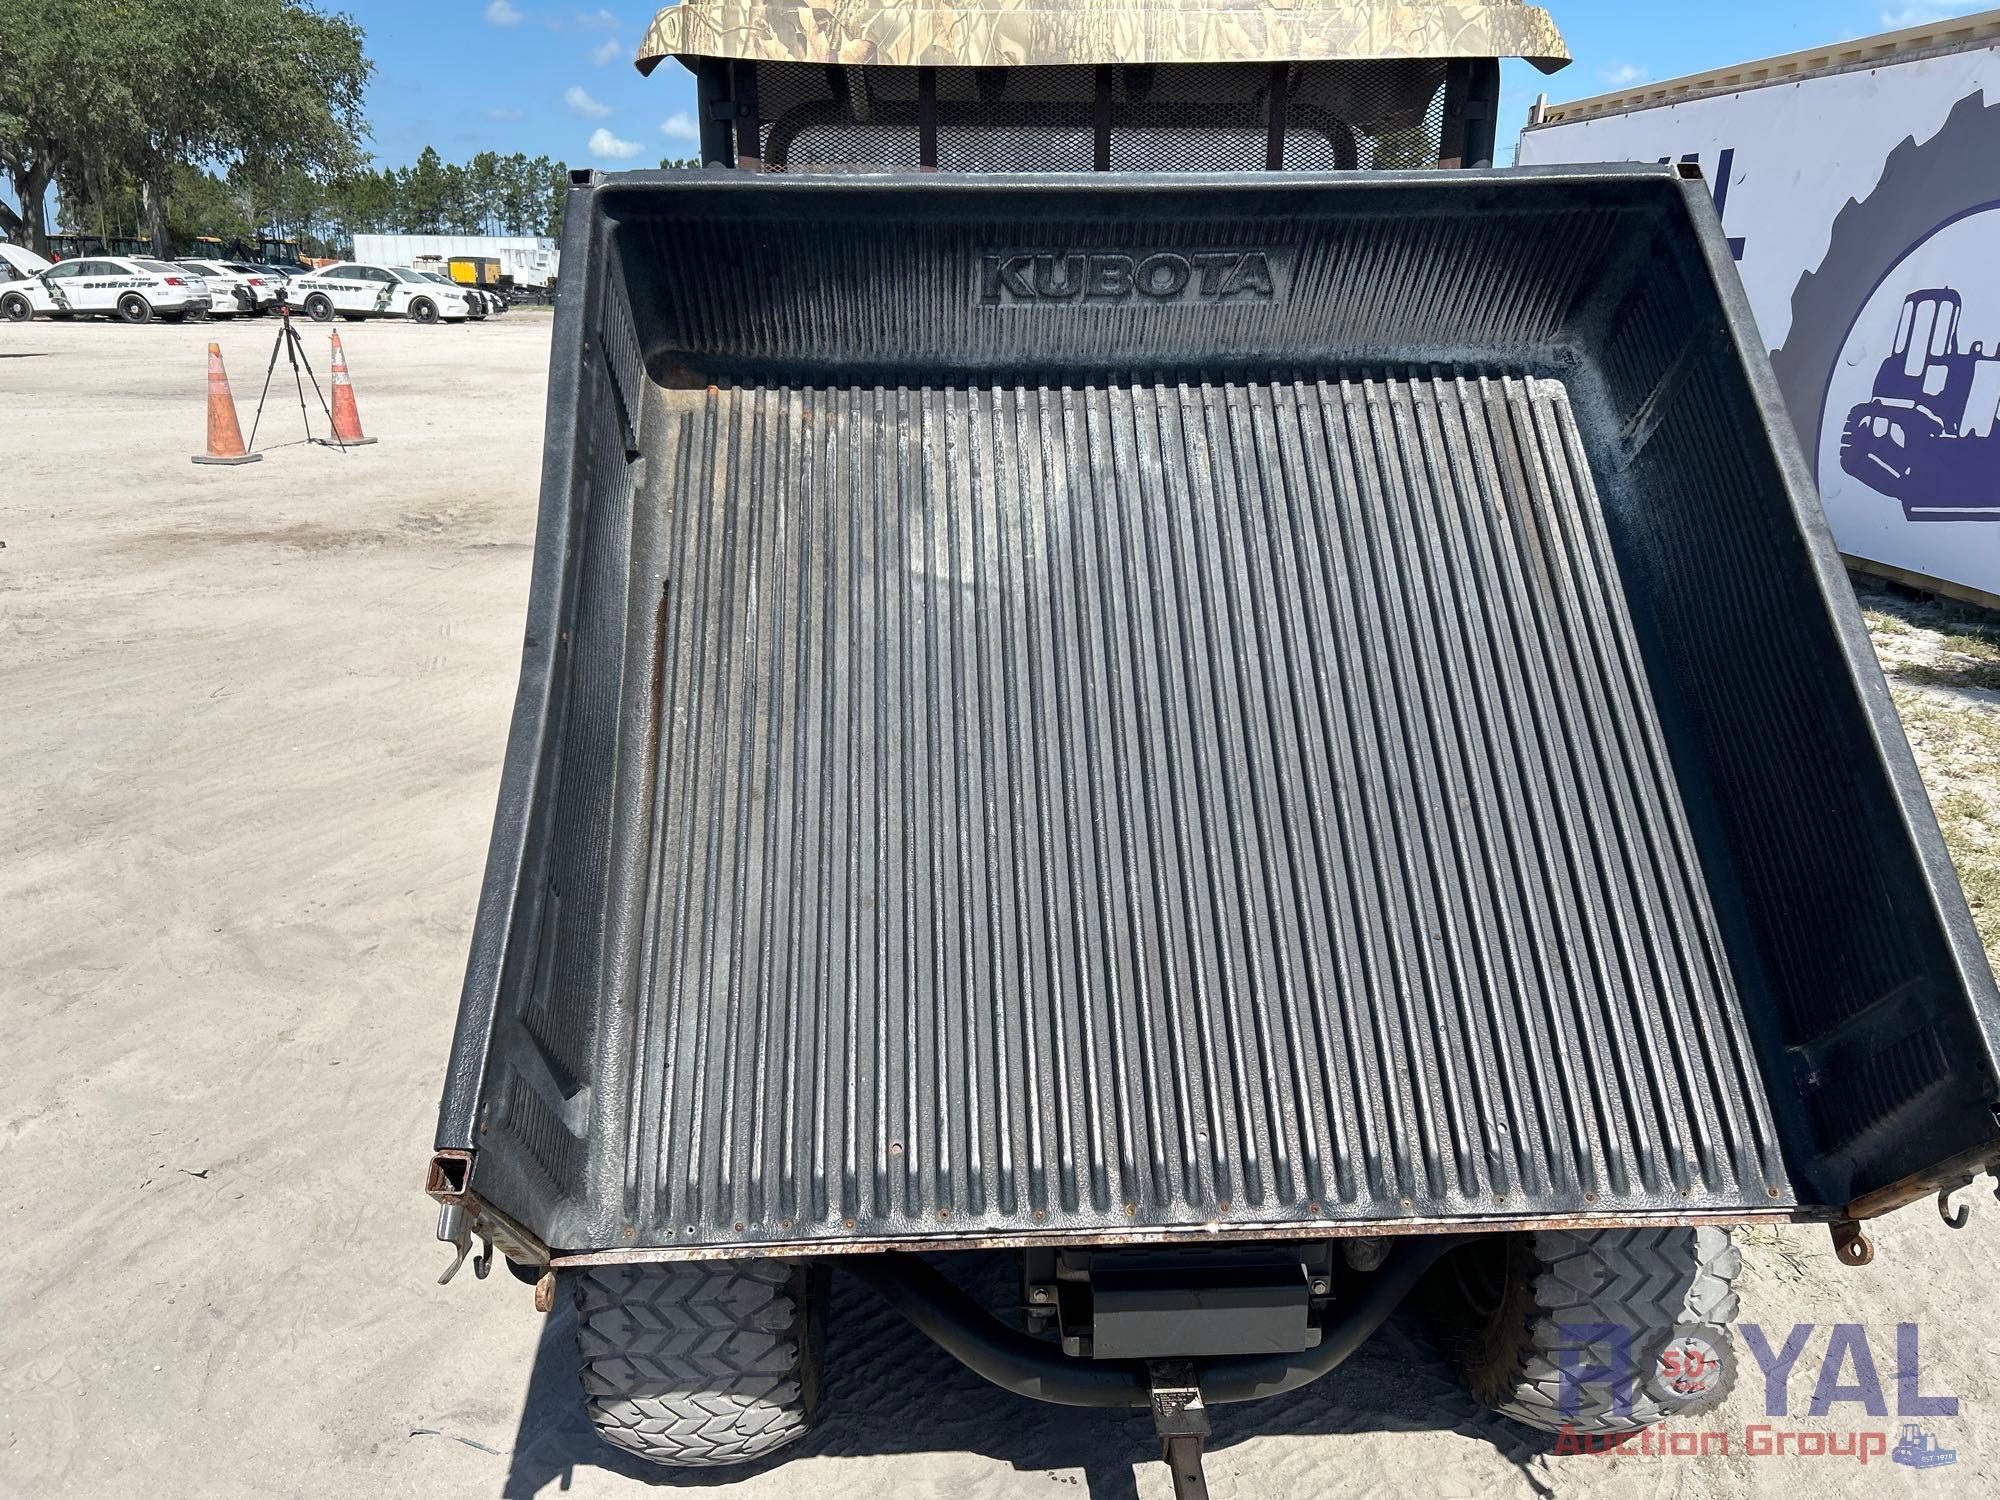 Kubota RTV900 4x4 Dump Utility Cart